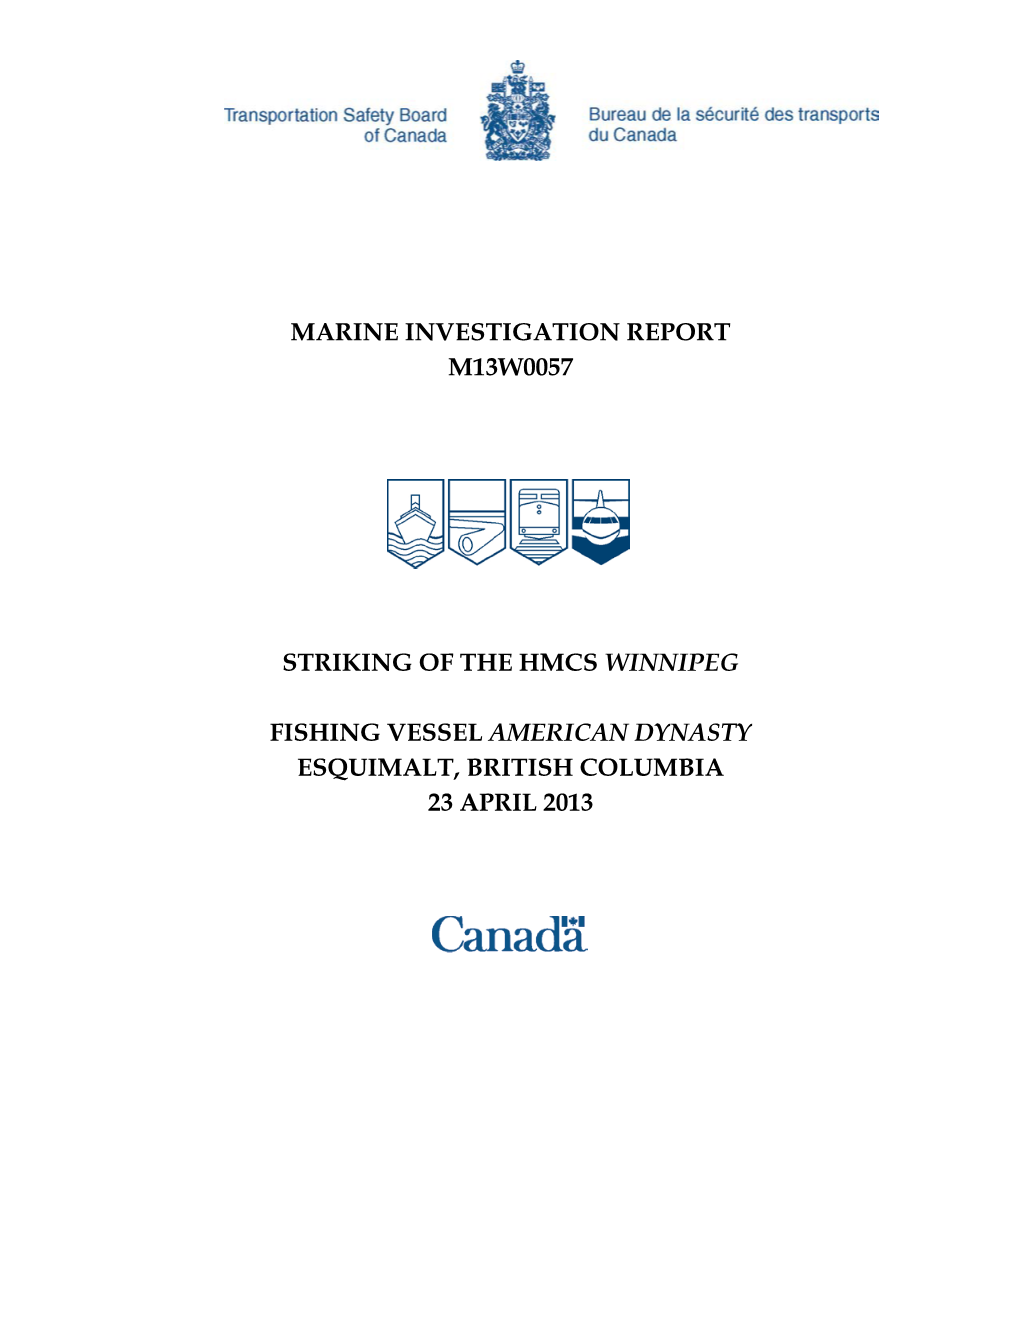 Marine Investigation Report M13w0057